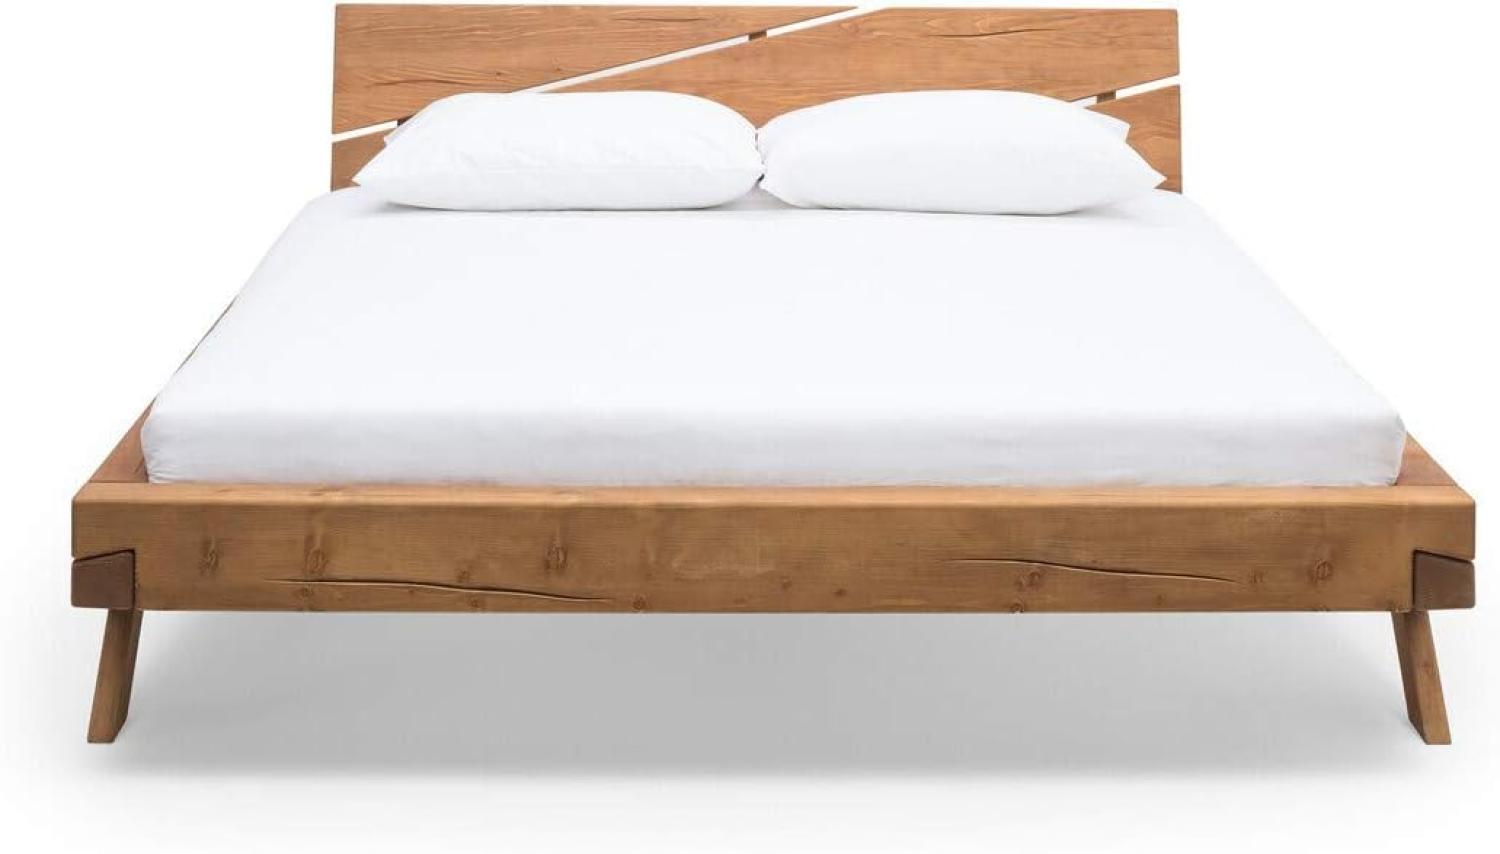 SalesFever Bett Balkenbett 160 x 200 cm Fichtenholz natur Bild 1